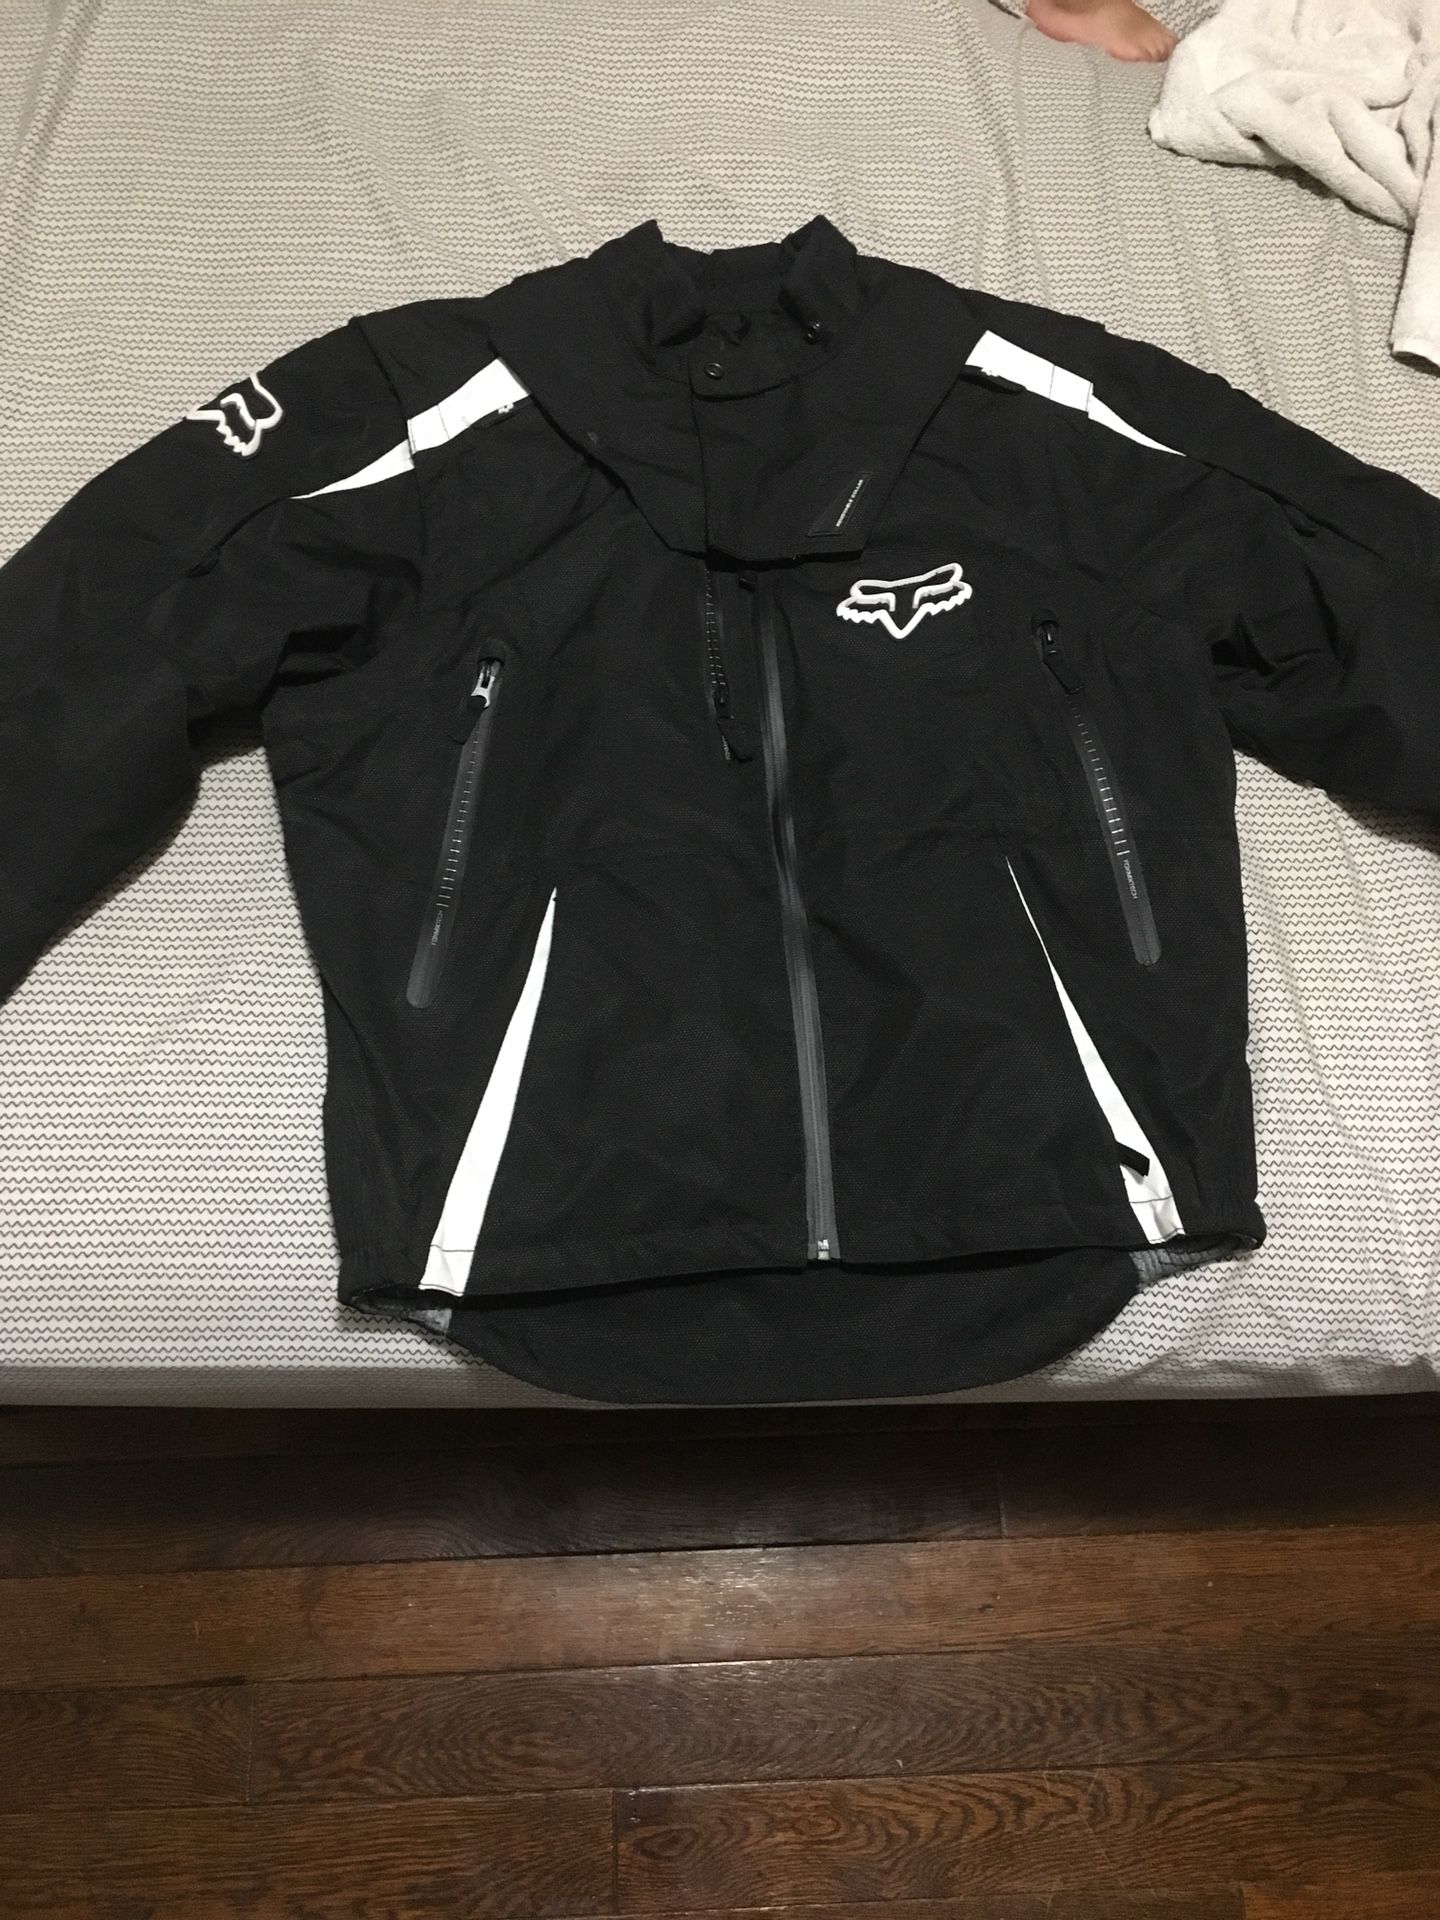 Motorcycle jacket/vest